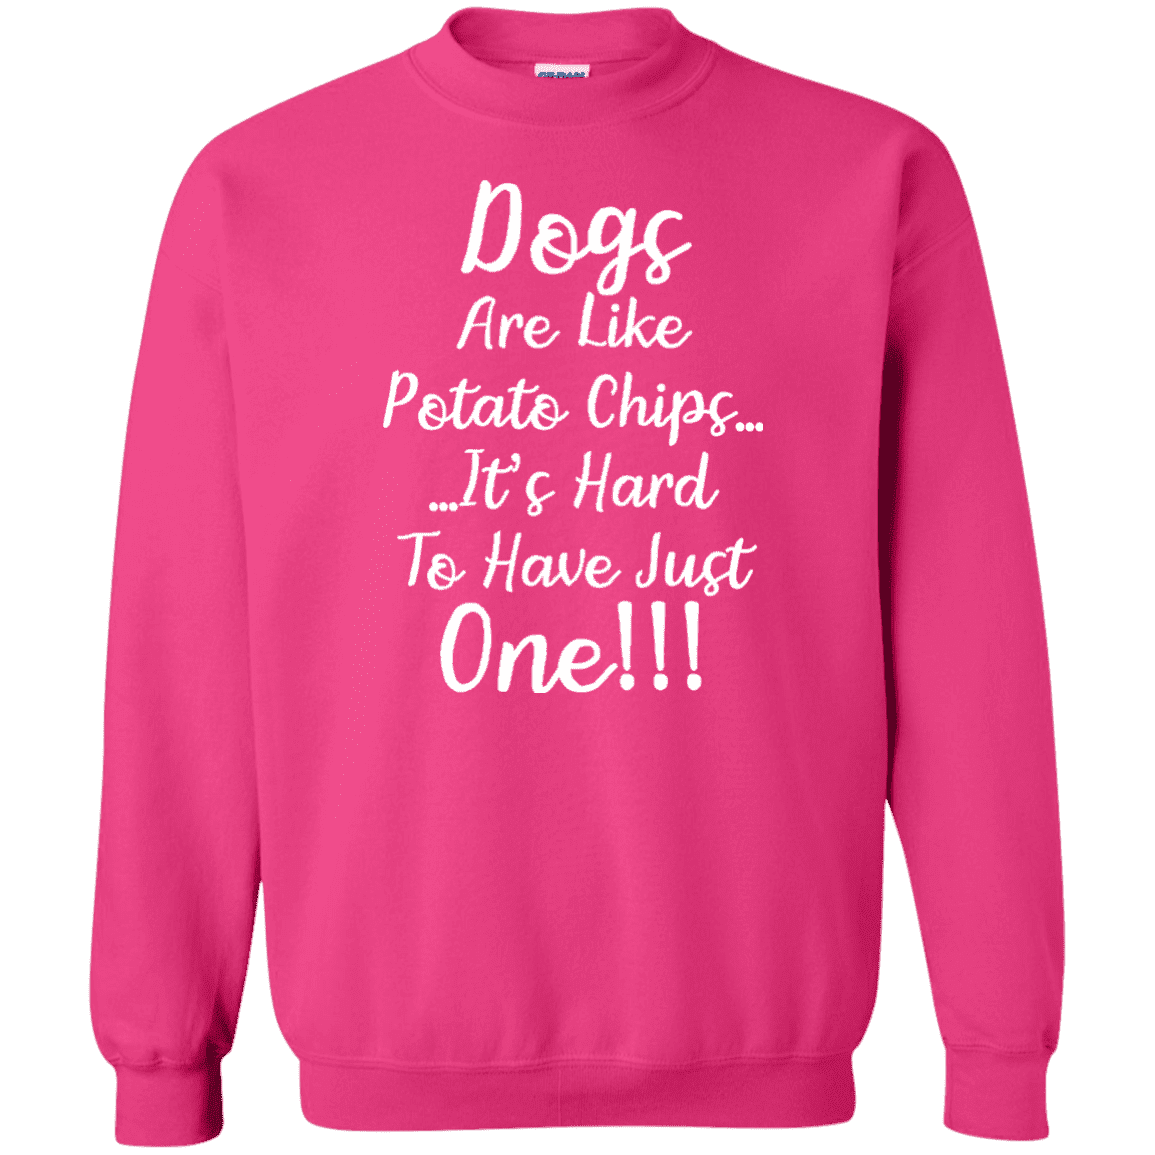 Dogs Are Like Potato Chips - Sweatshirt.